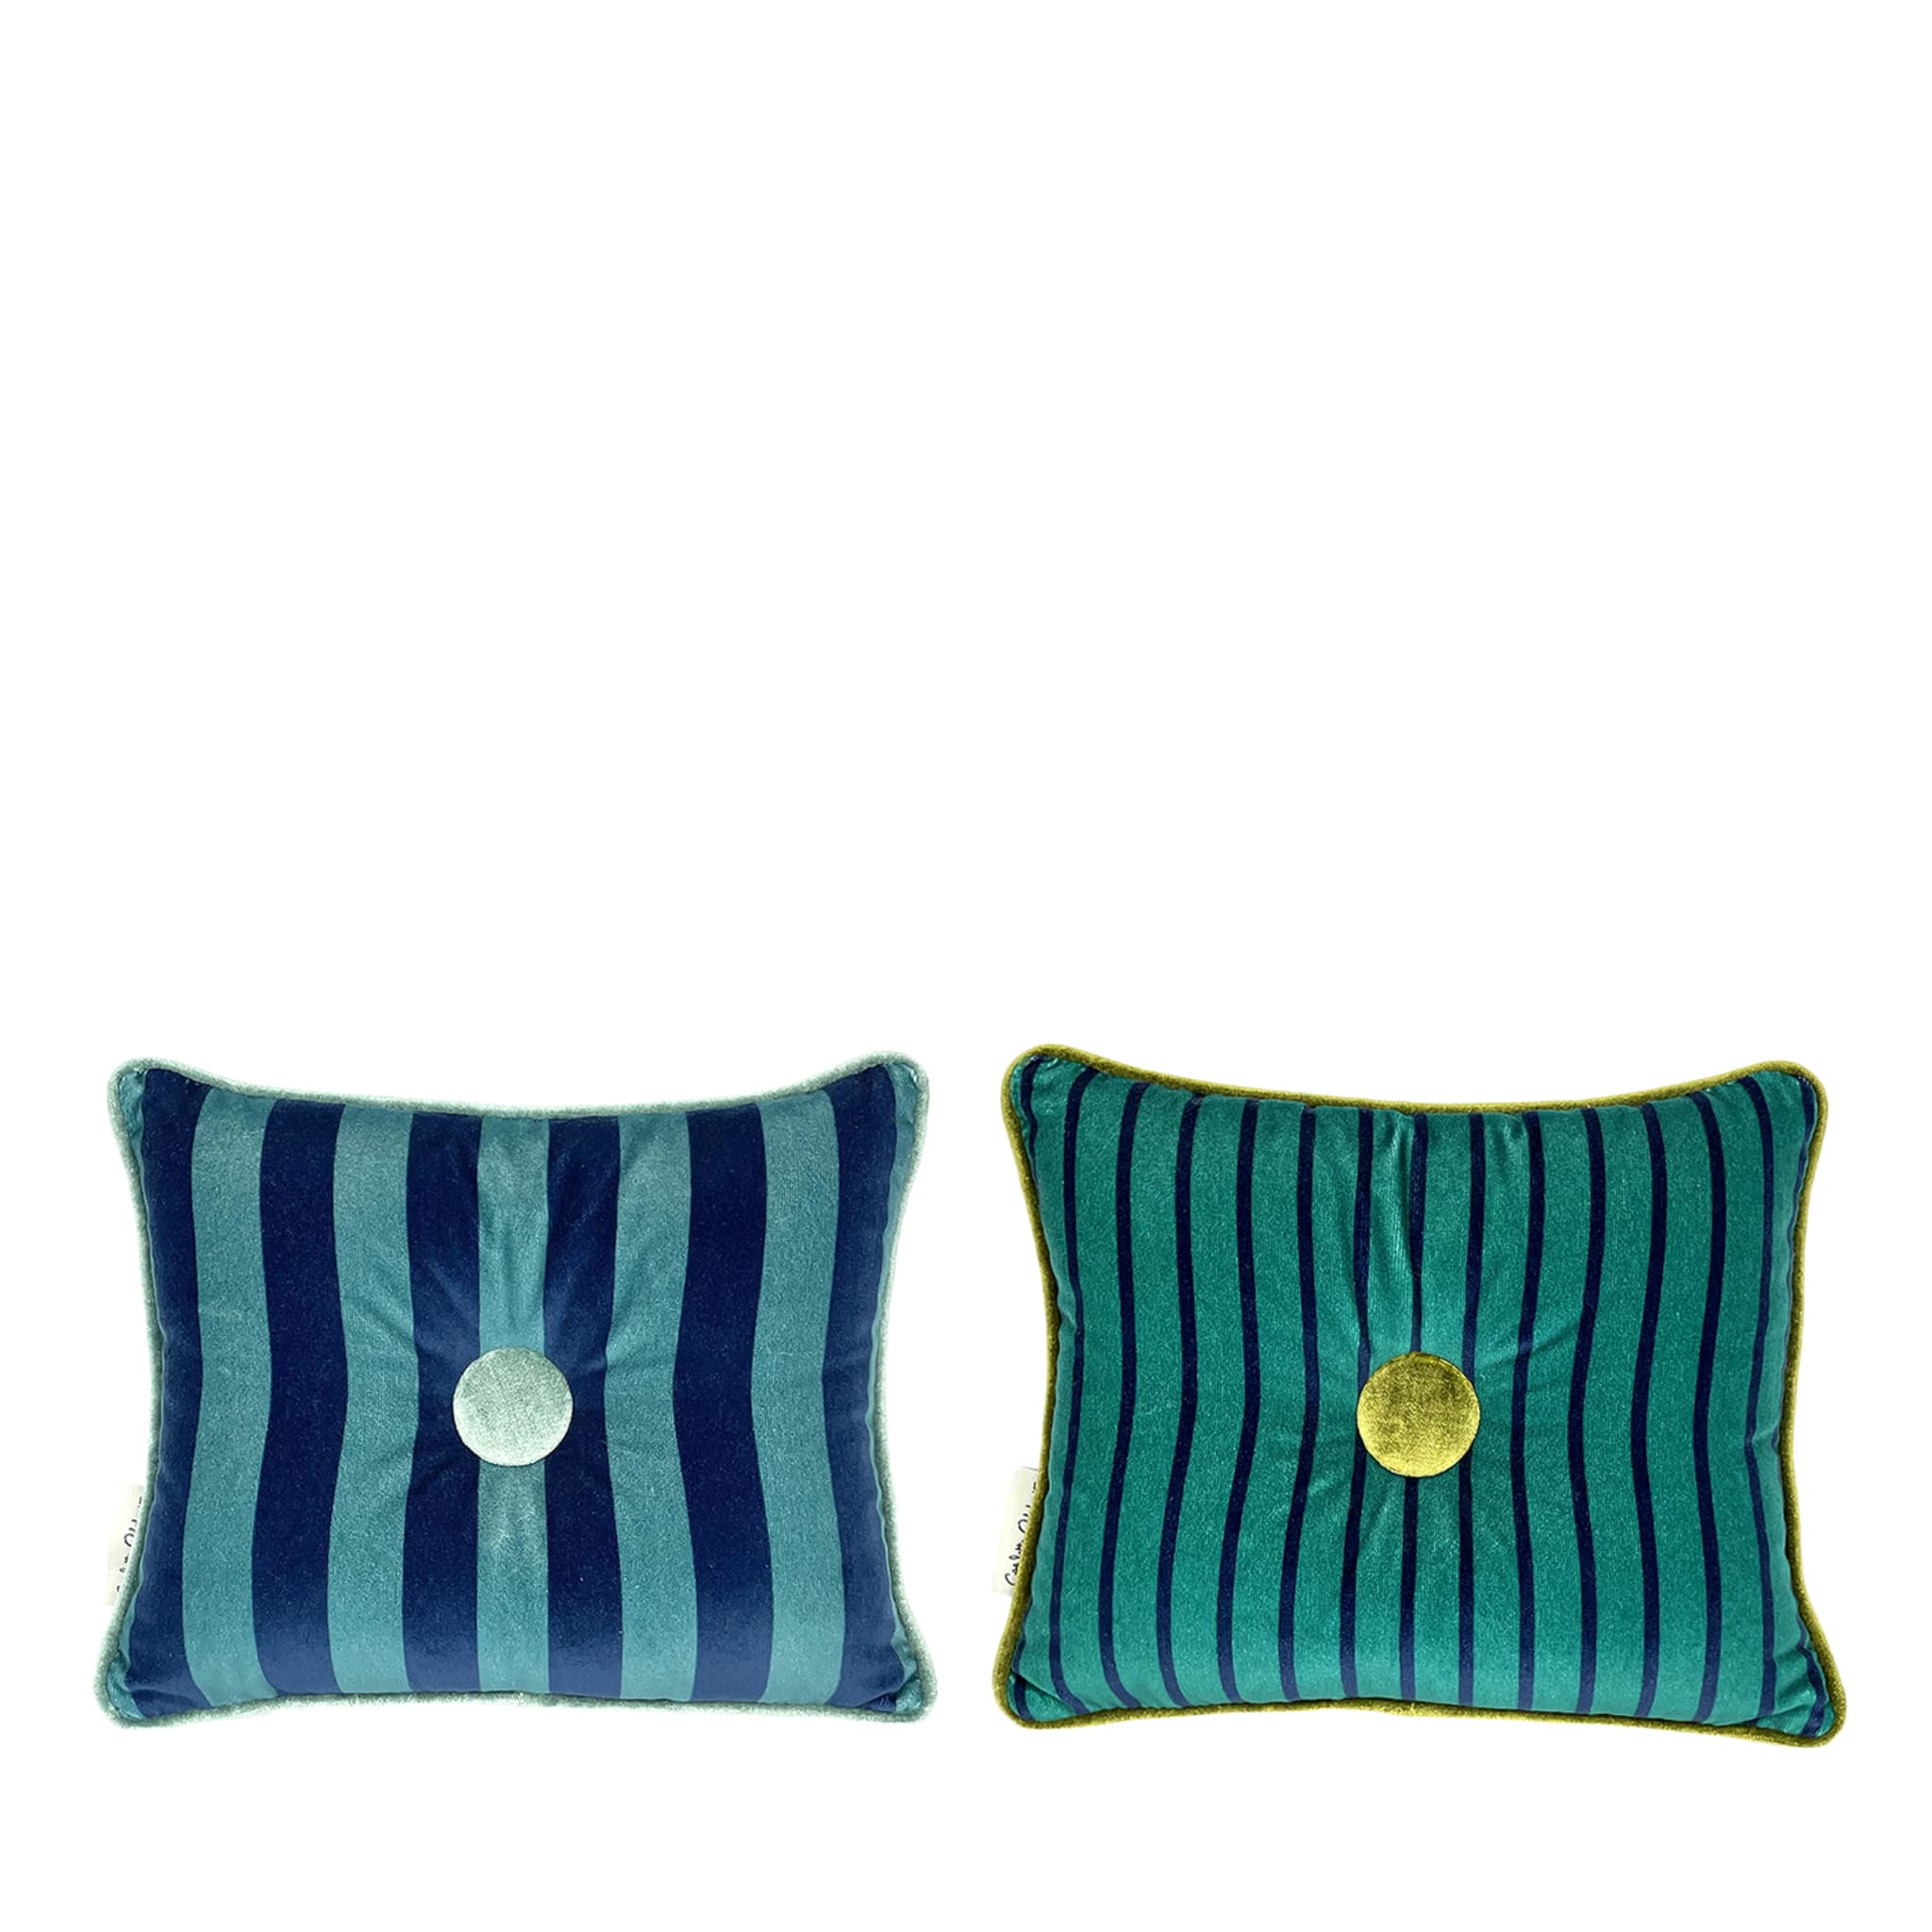 Sweet Pillow Blue Baltic & Peacock Green Cushions - Main view